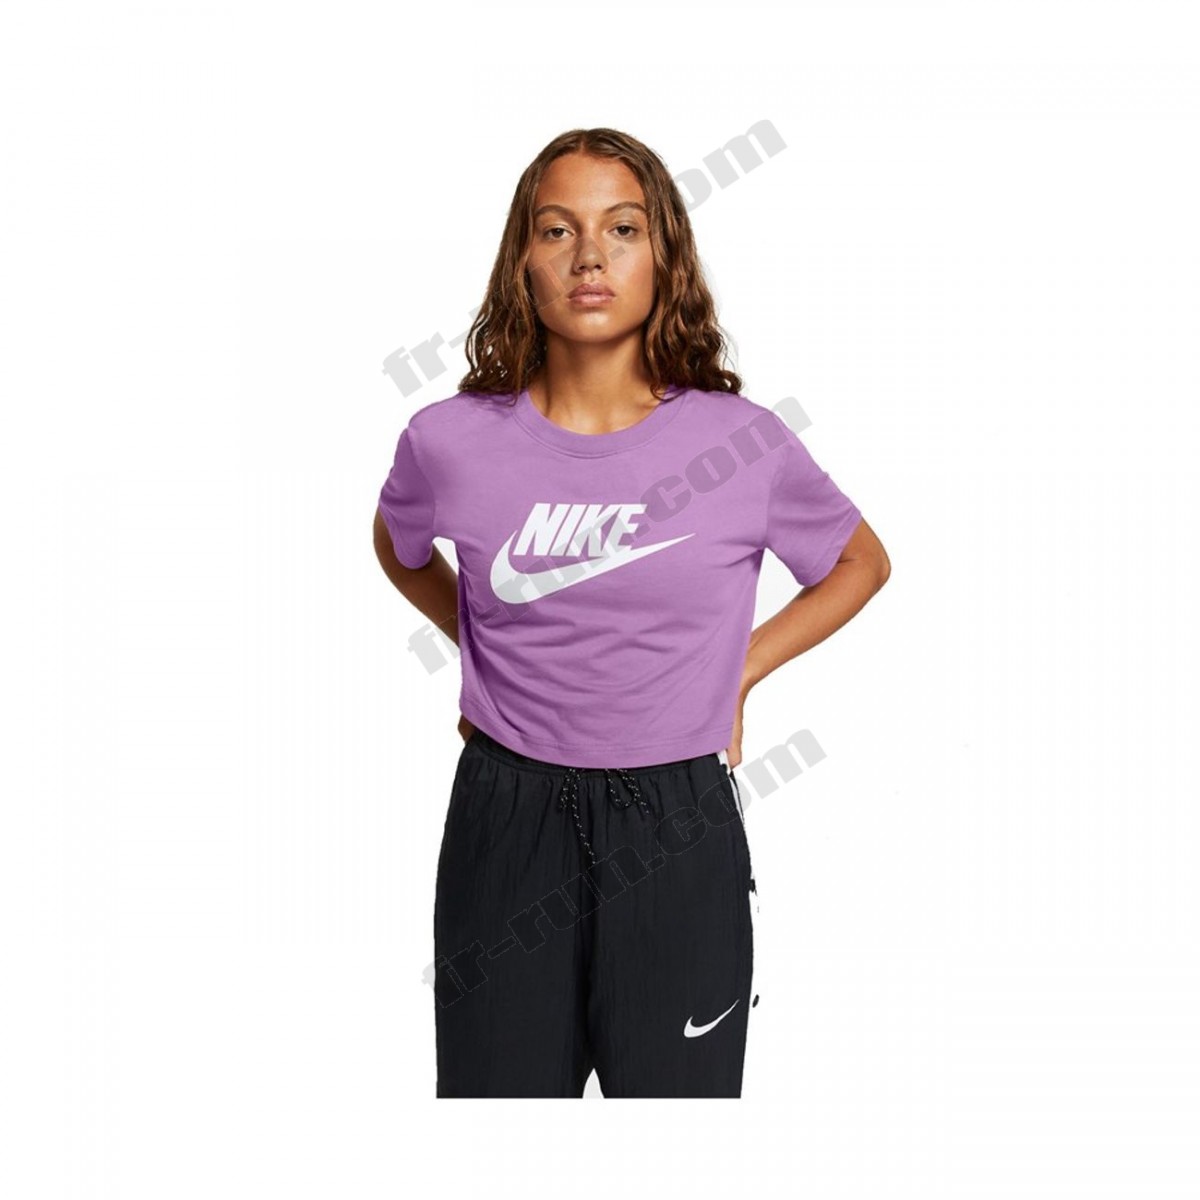 Nike/running femme NIKE Nike Wmns Essential ◇◇◇ Pas Cher Du Tout - -0